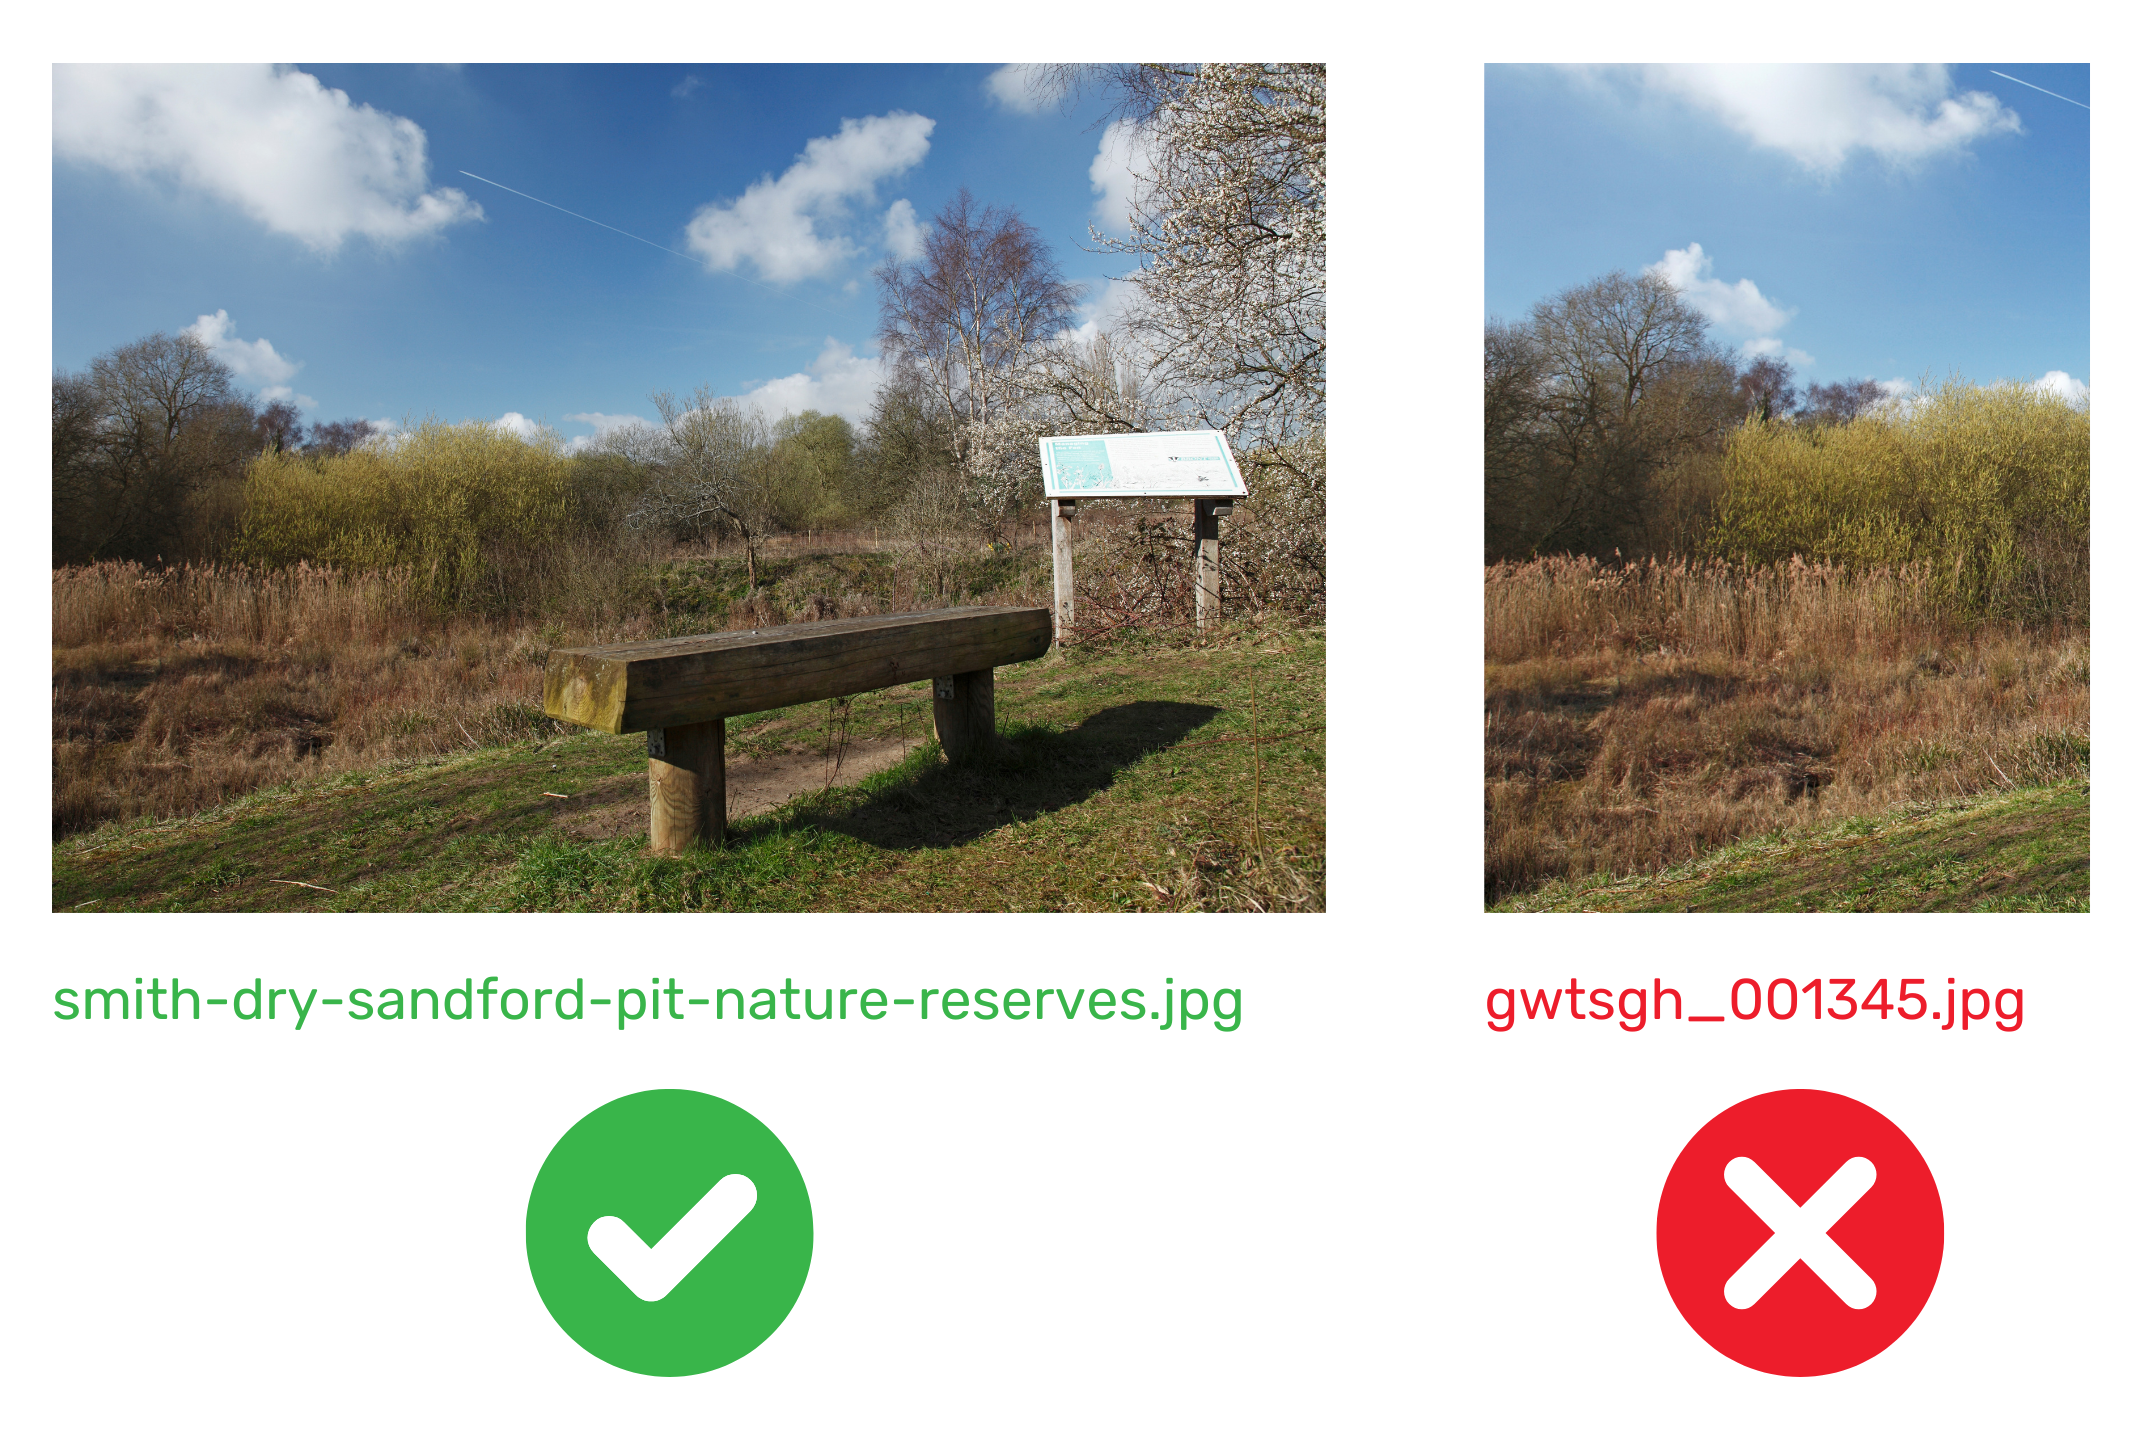 Photo competition guidance showing that entries should be landscape format not portrait